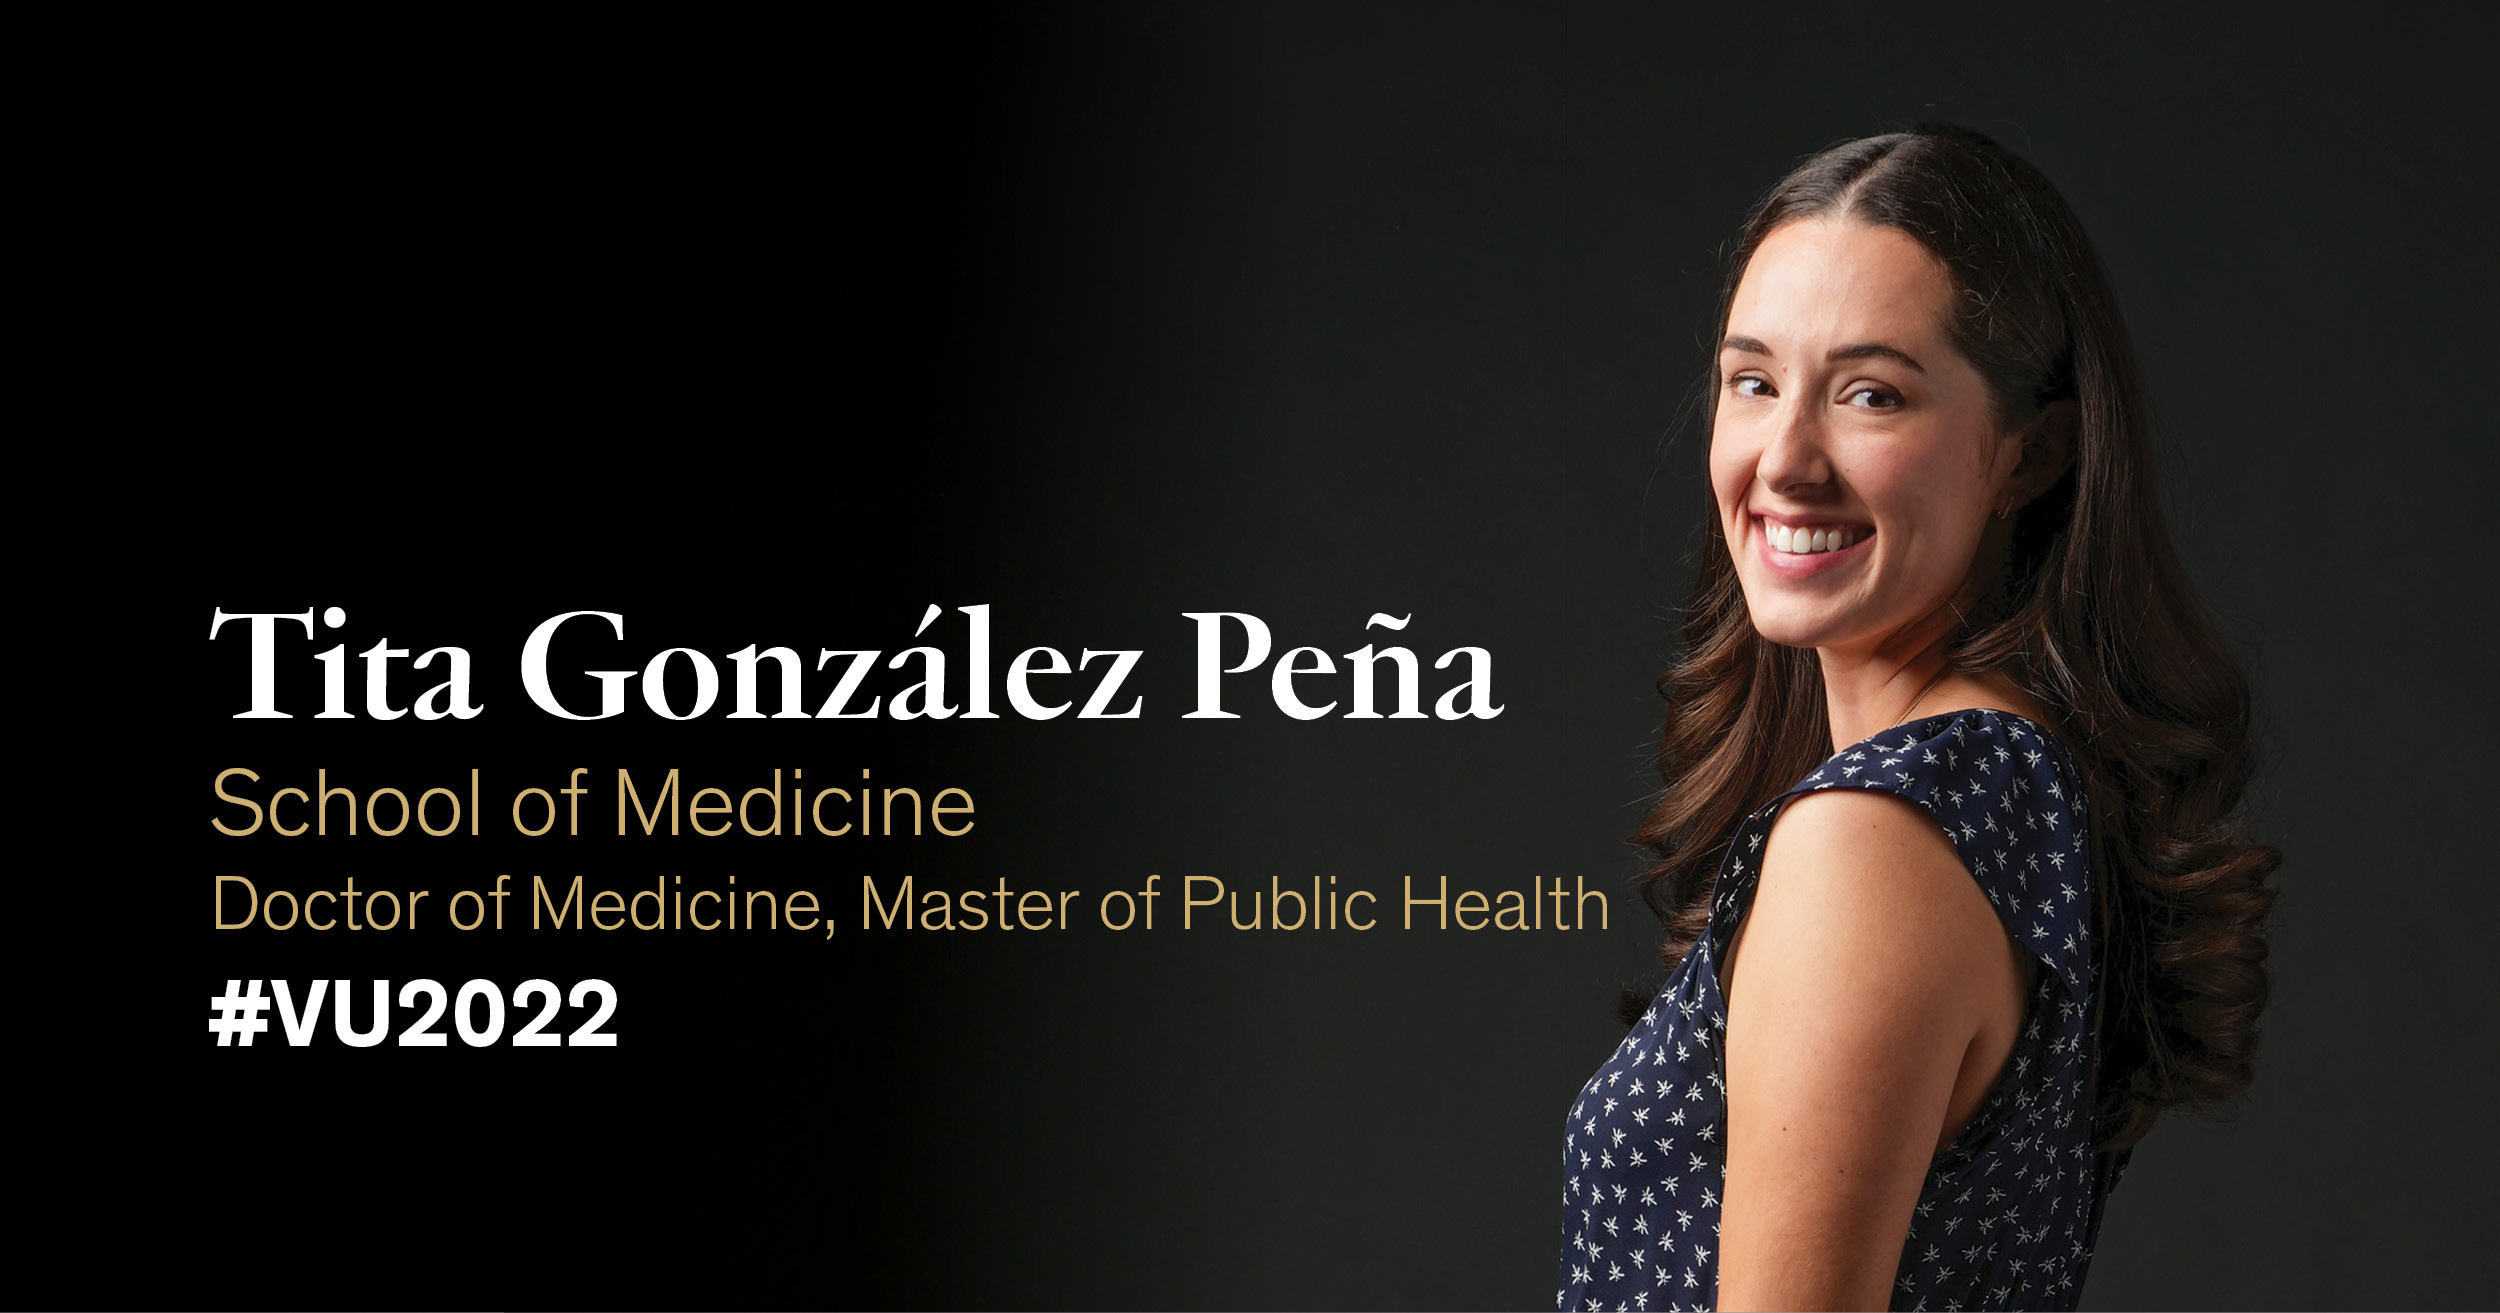 Class of 2022: Tita González Peña builds community through free medical clinic